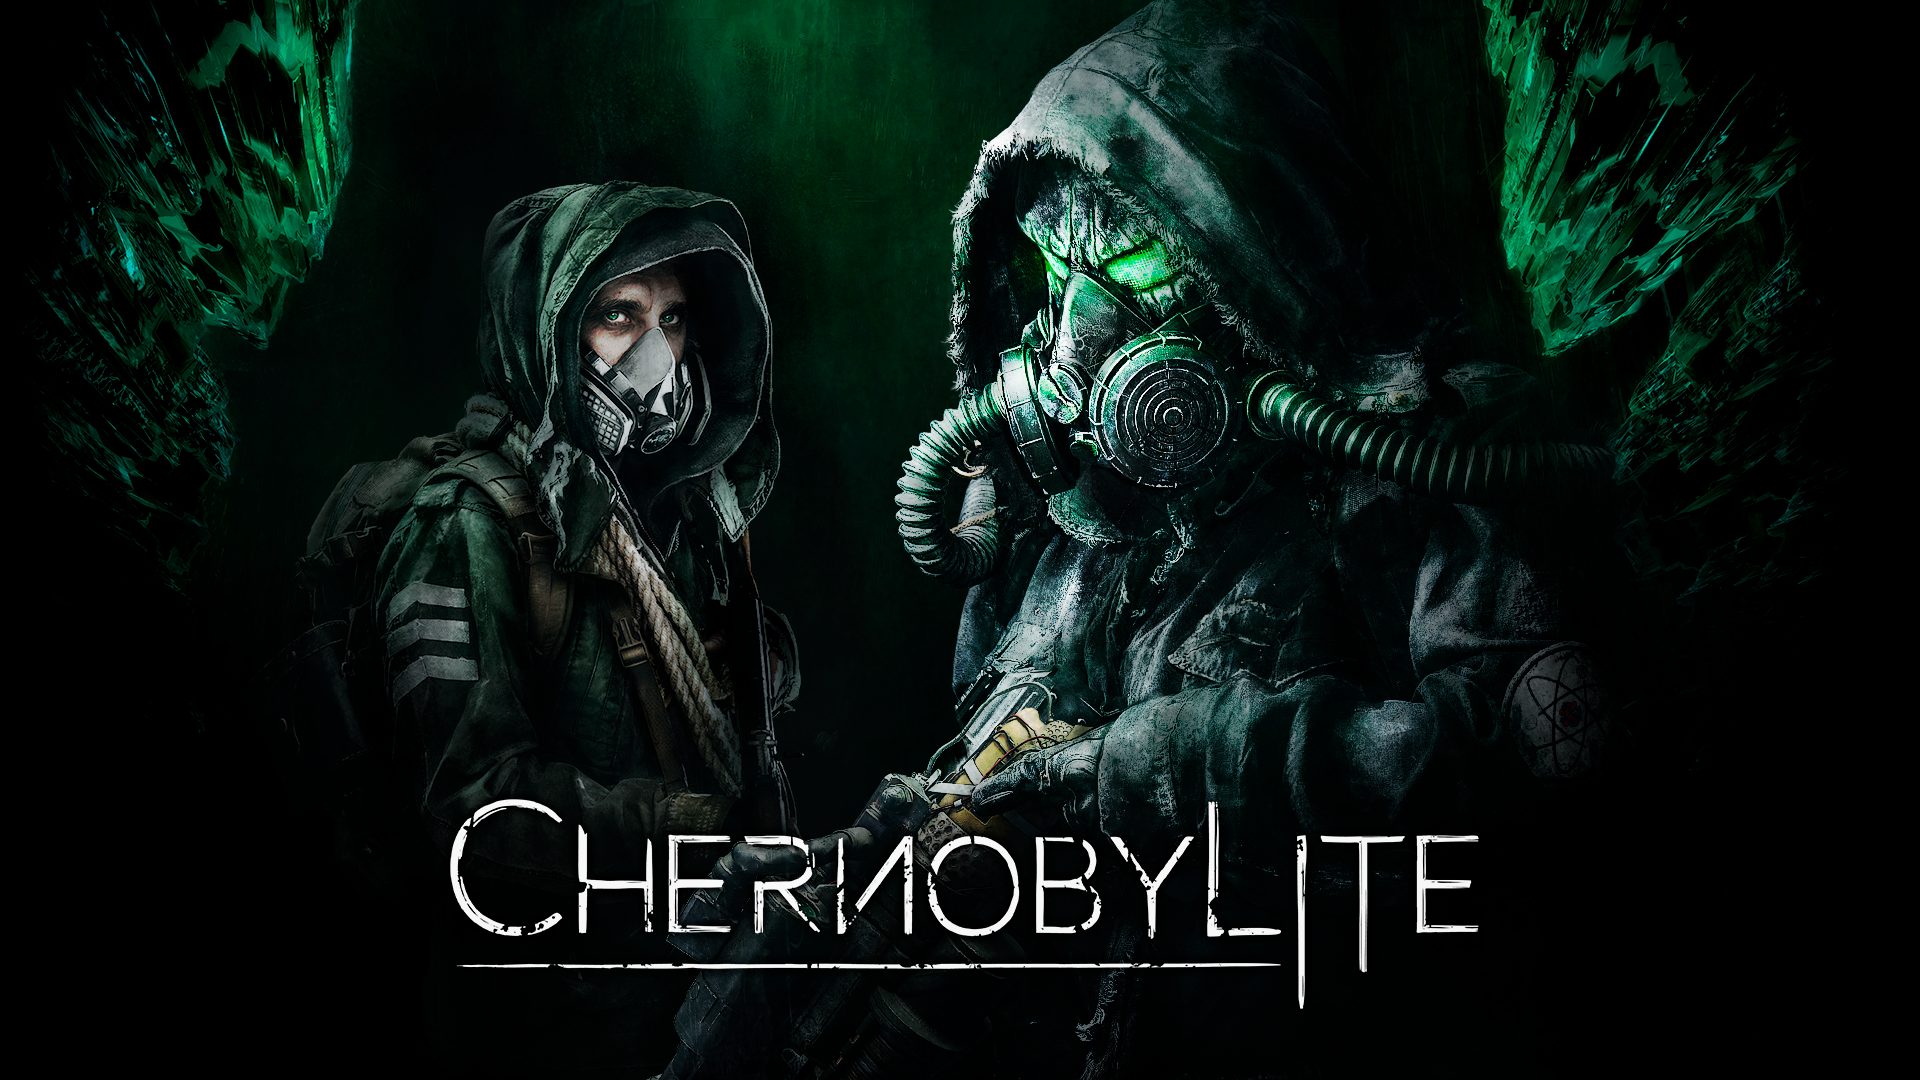 Chernobylite for PS4 Delayed Until September 28th